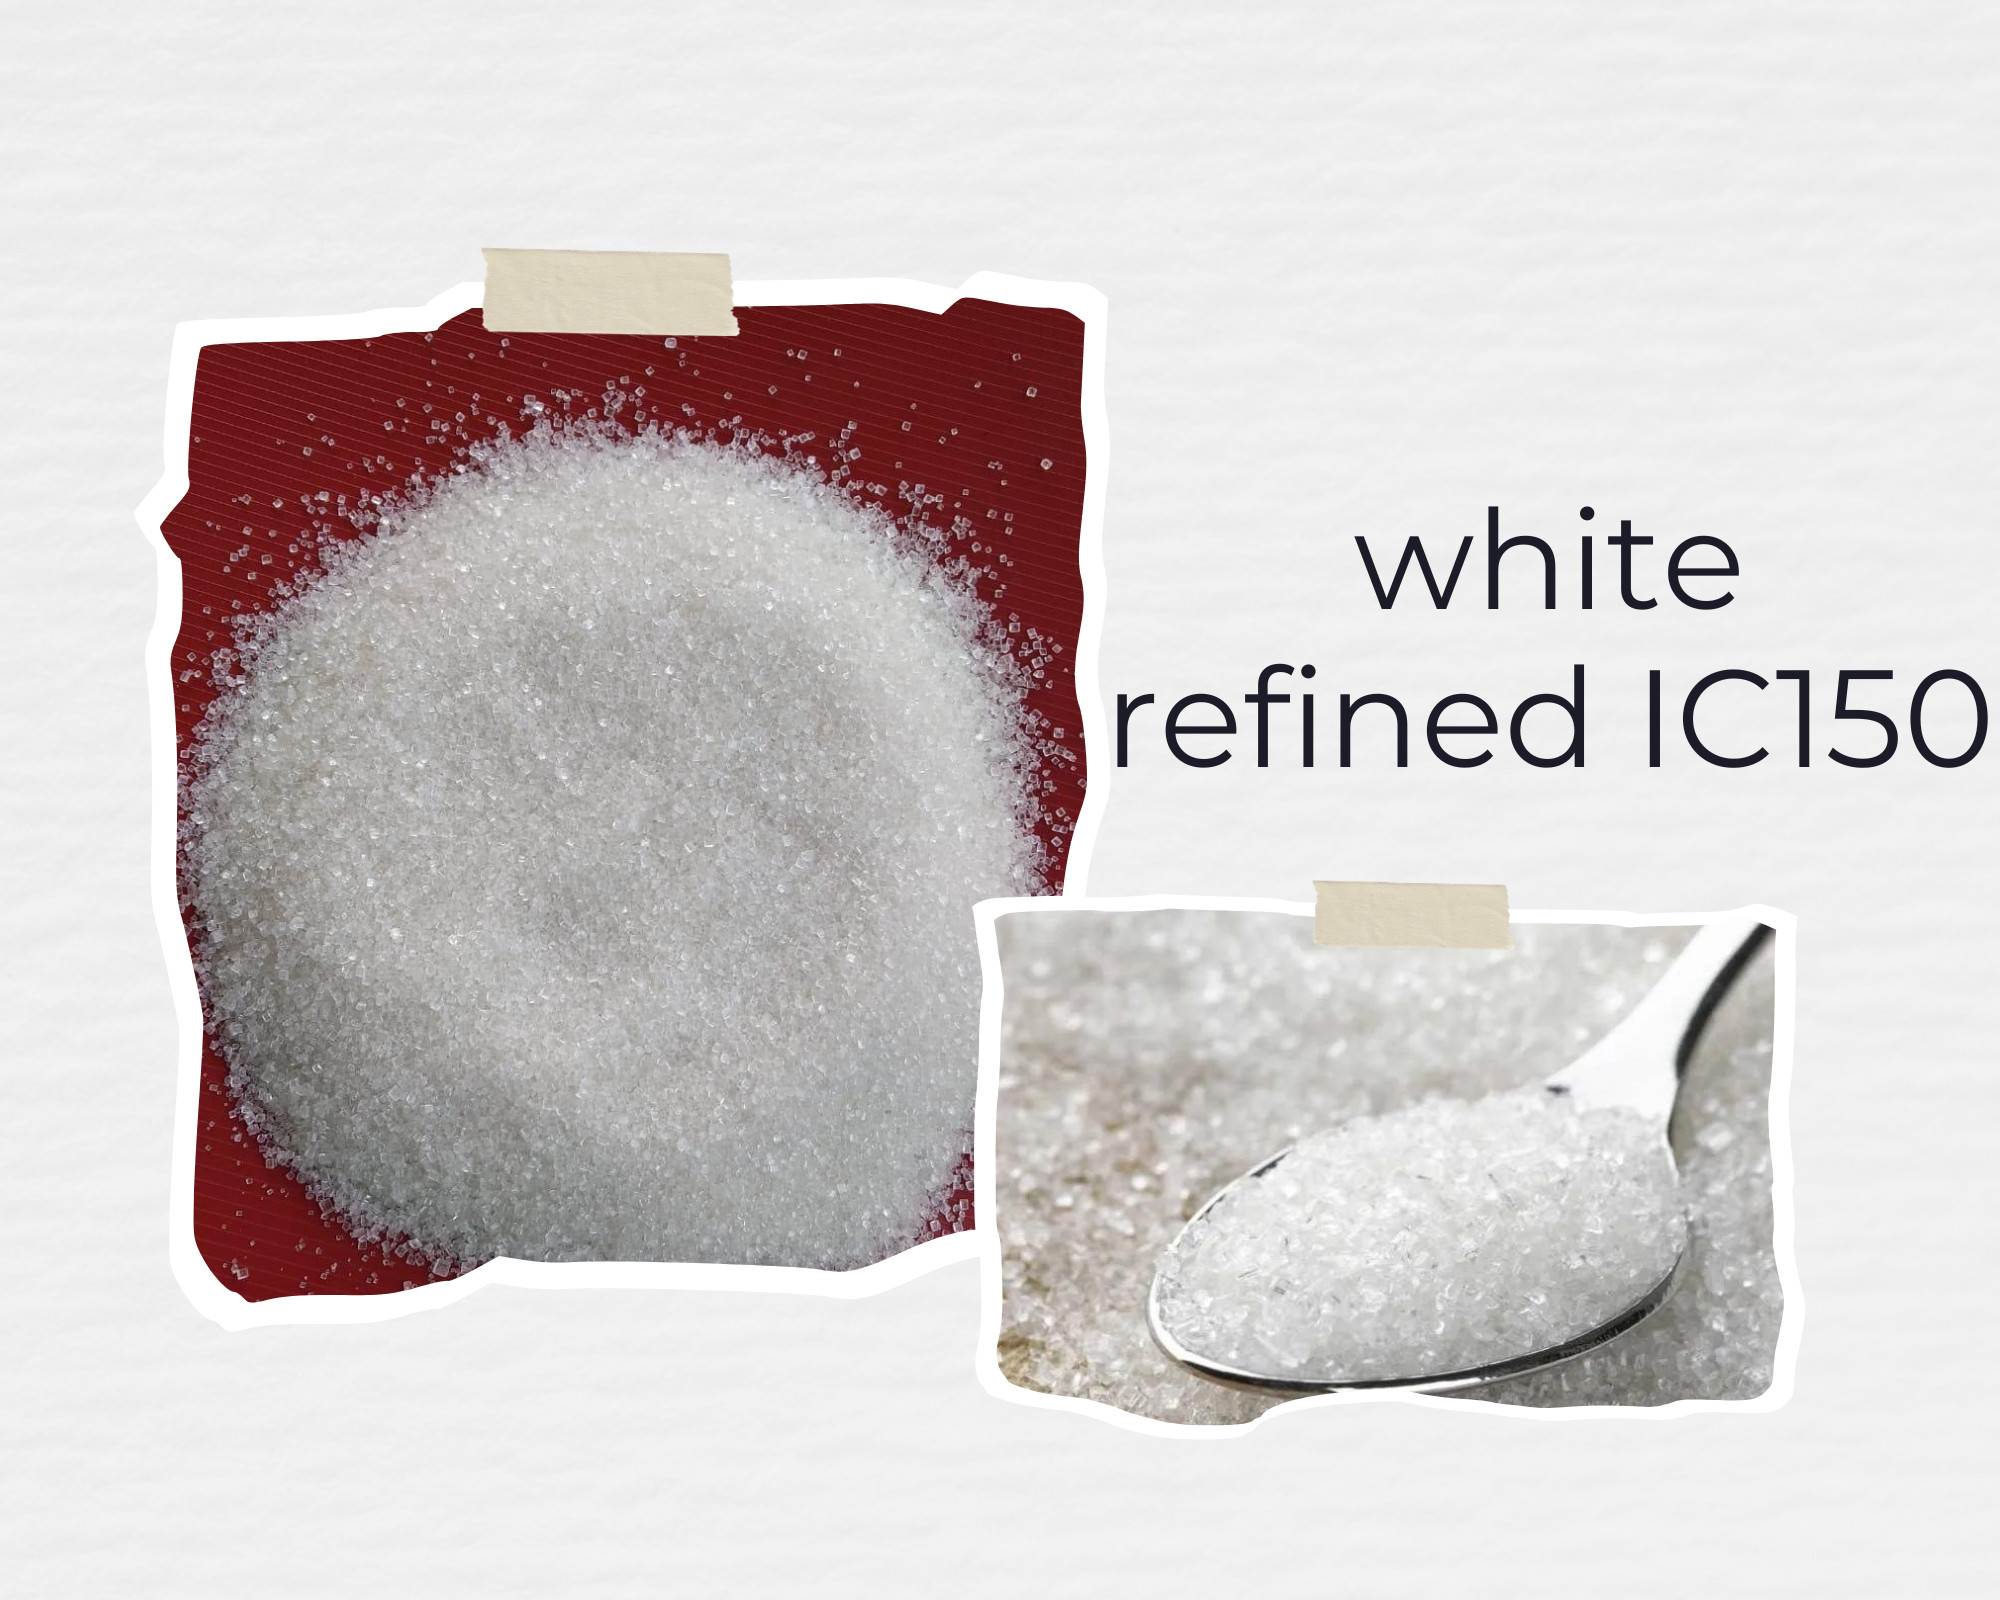 White refined sugar IC150